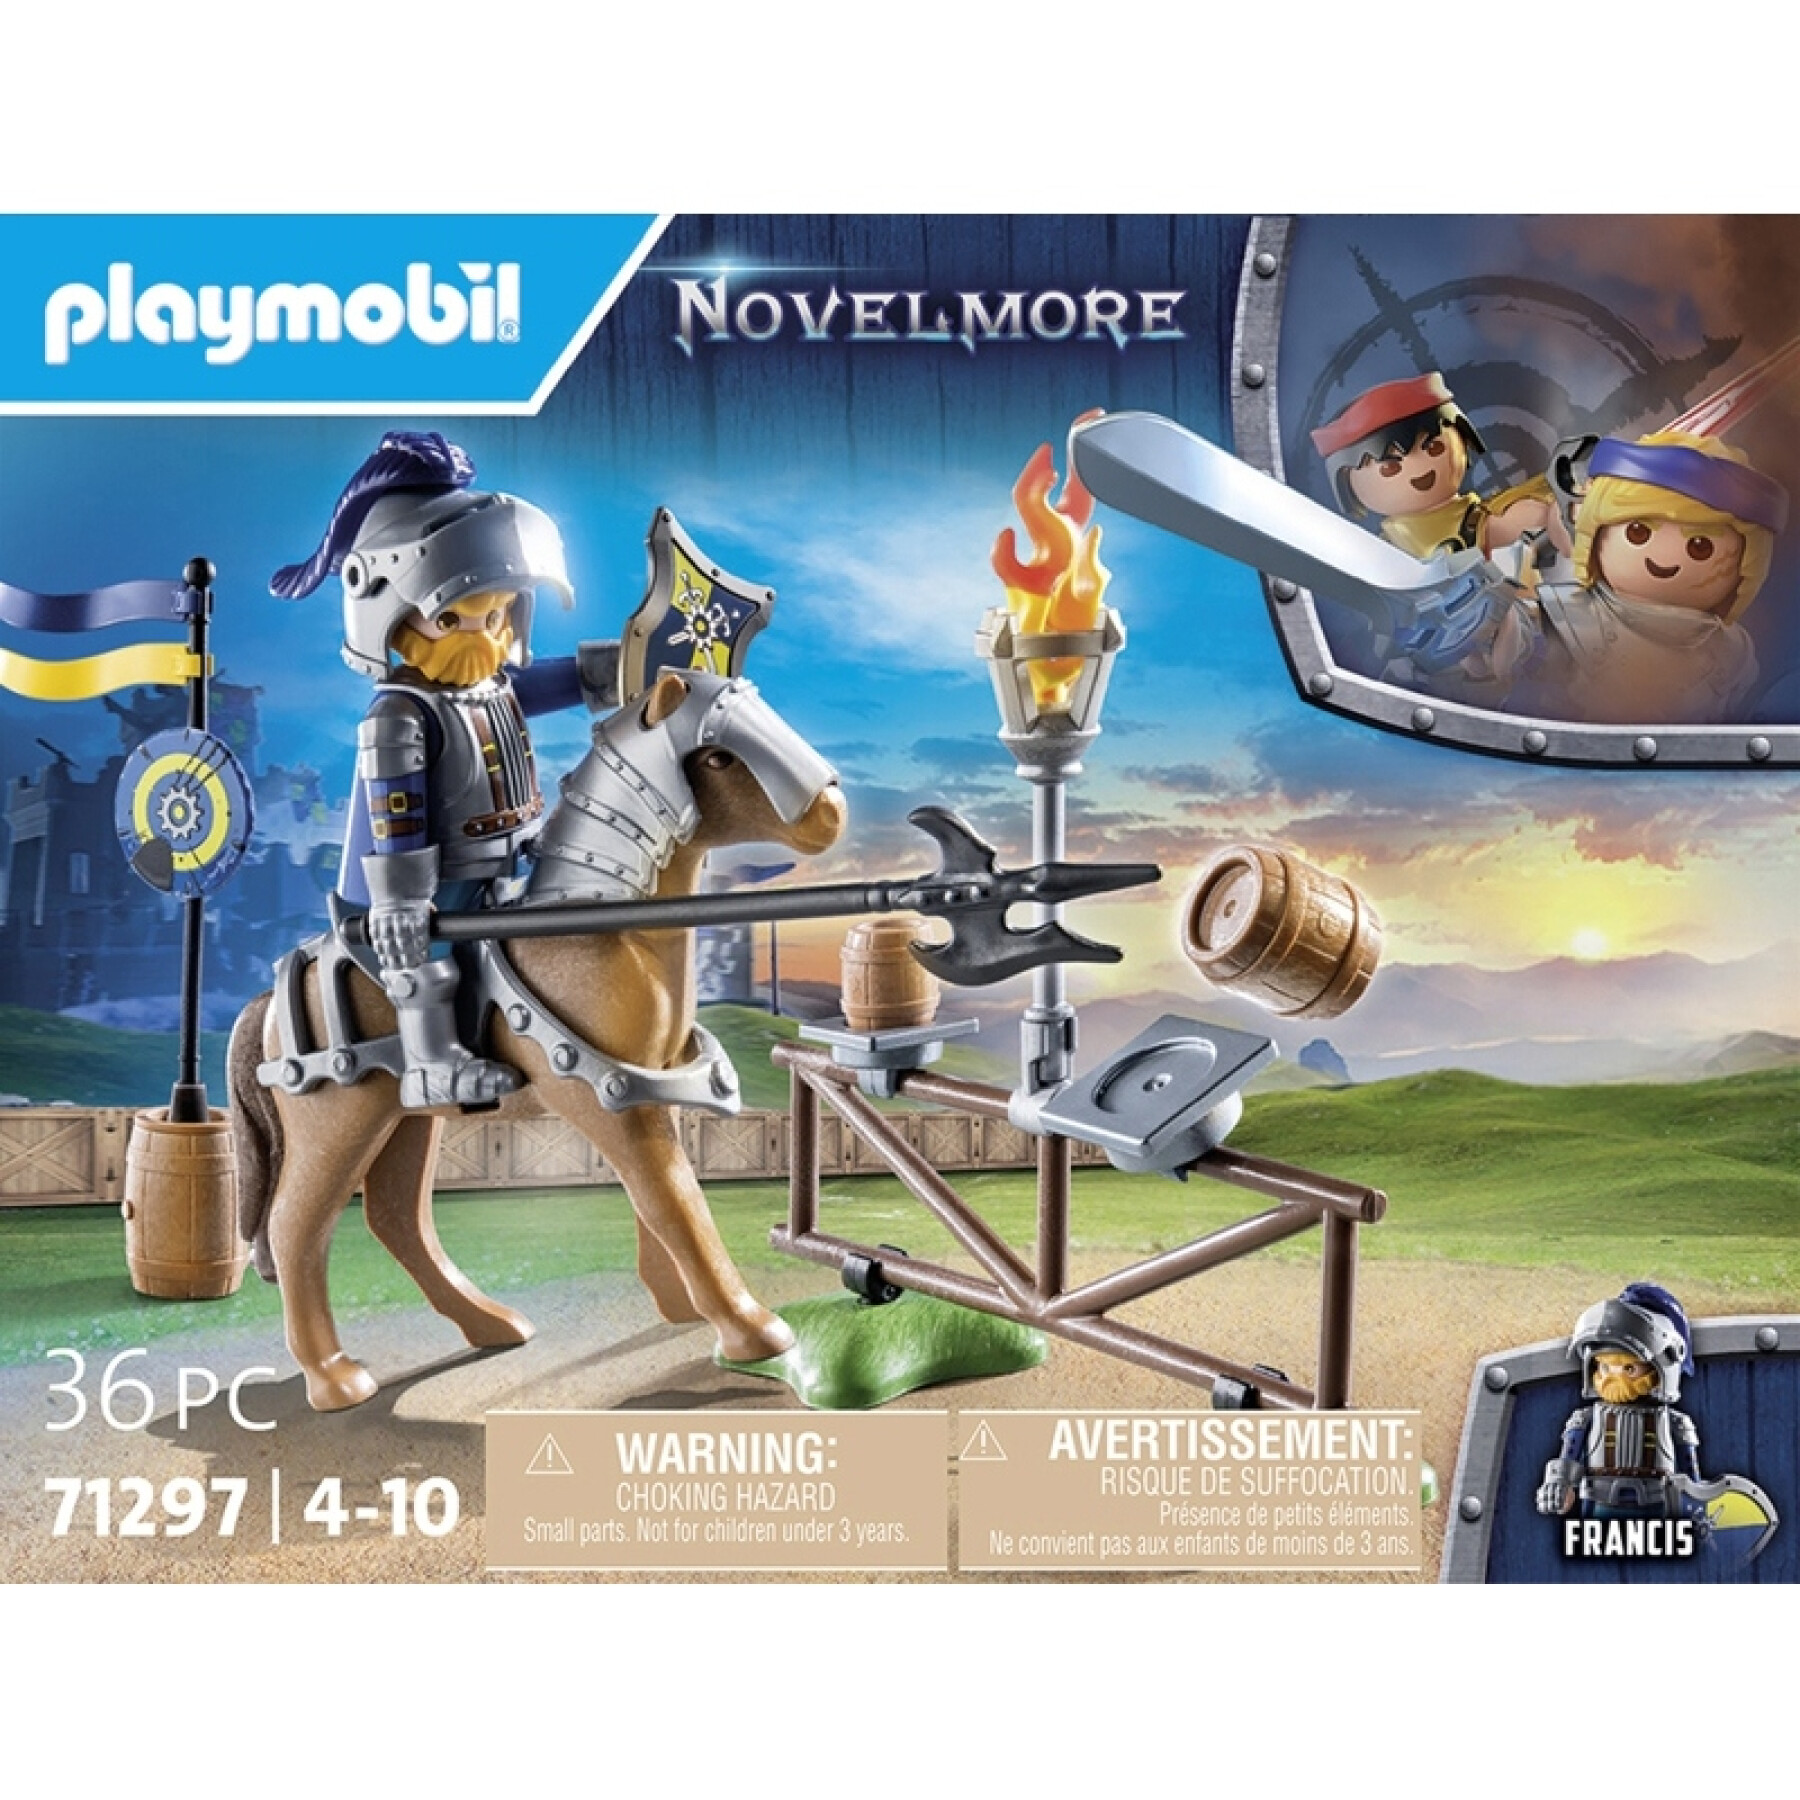 Figurine chevalier Playmobil Novelmore